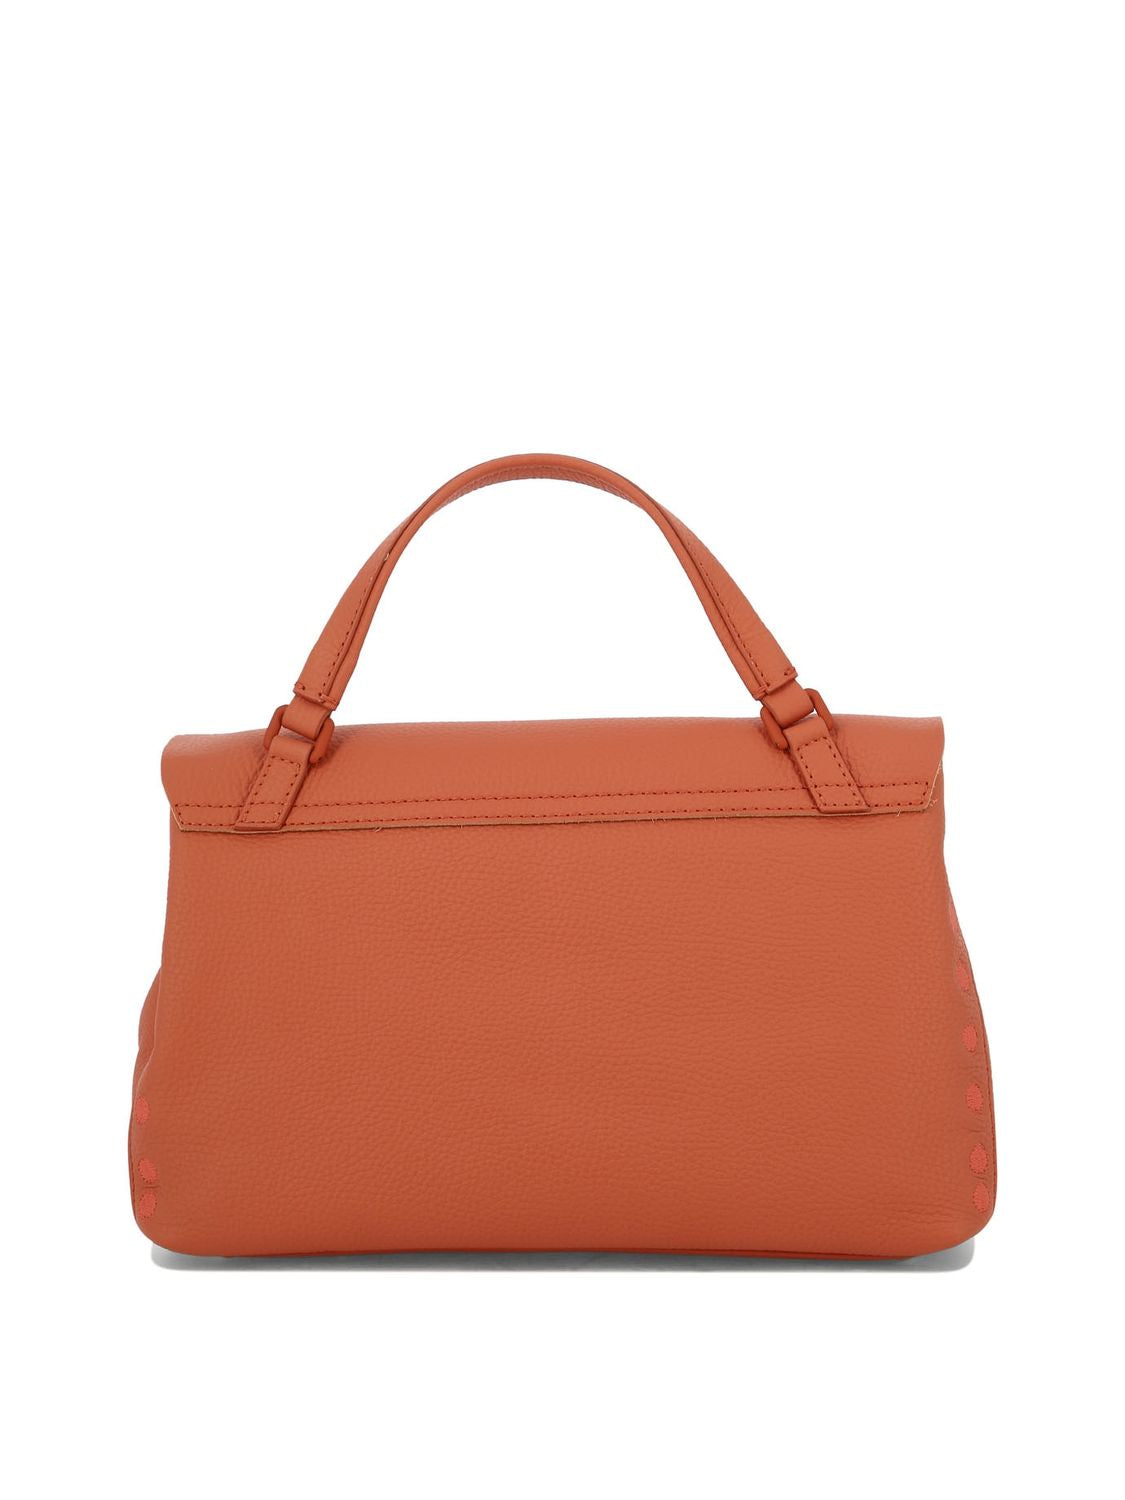 ZANELLATO Sophisticated Orange Leather Handbag for Women - FW24